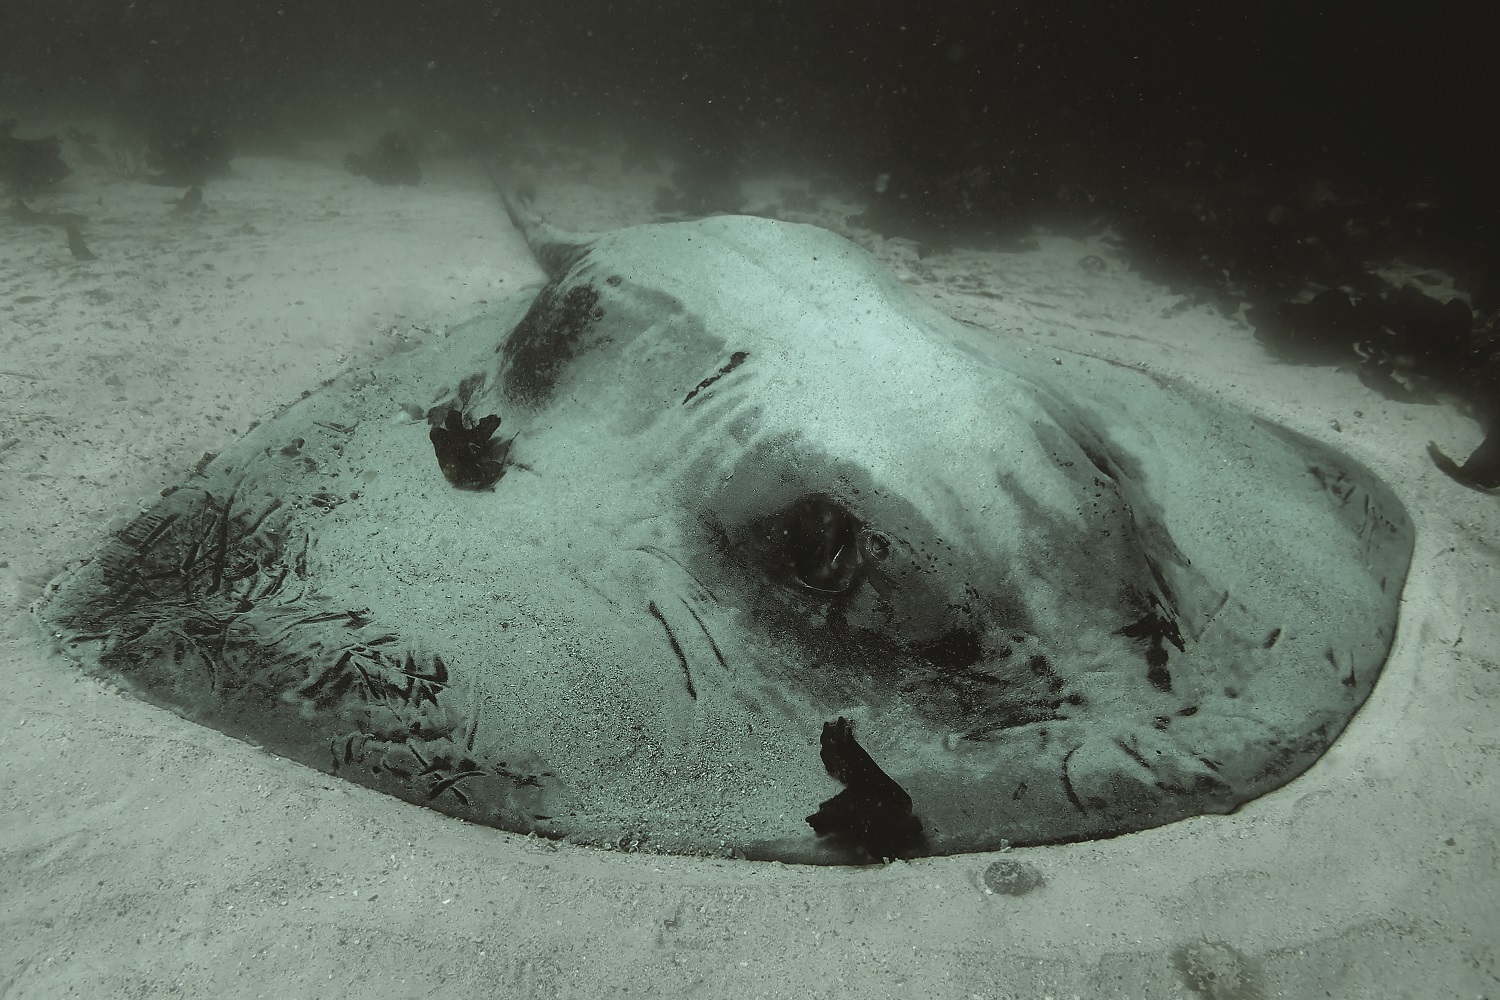 Giant stingray resting on the sandy ocean bottom from Underwater Wild